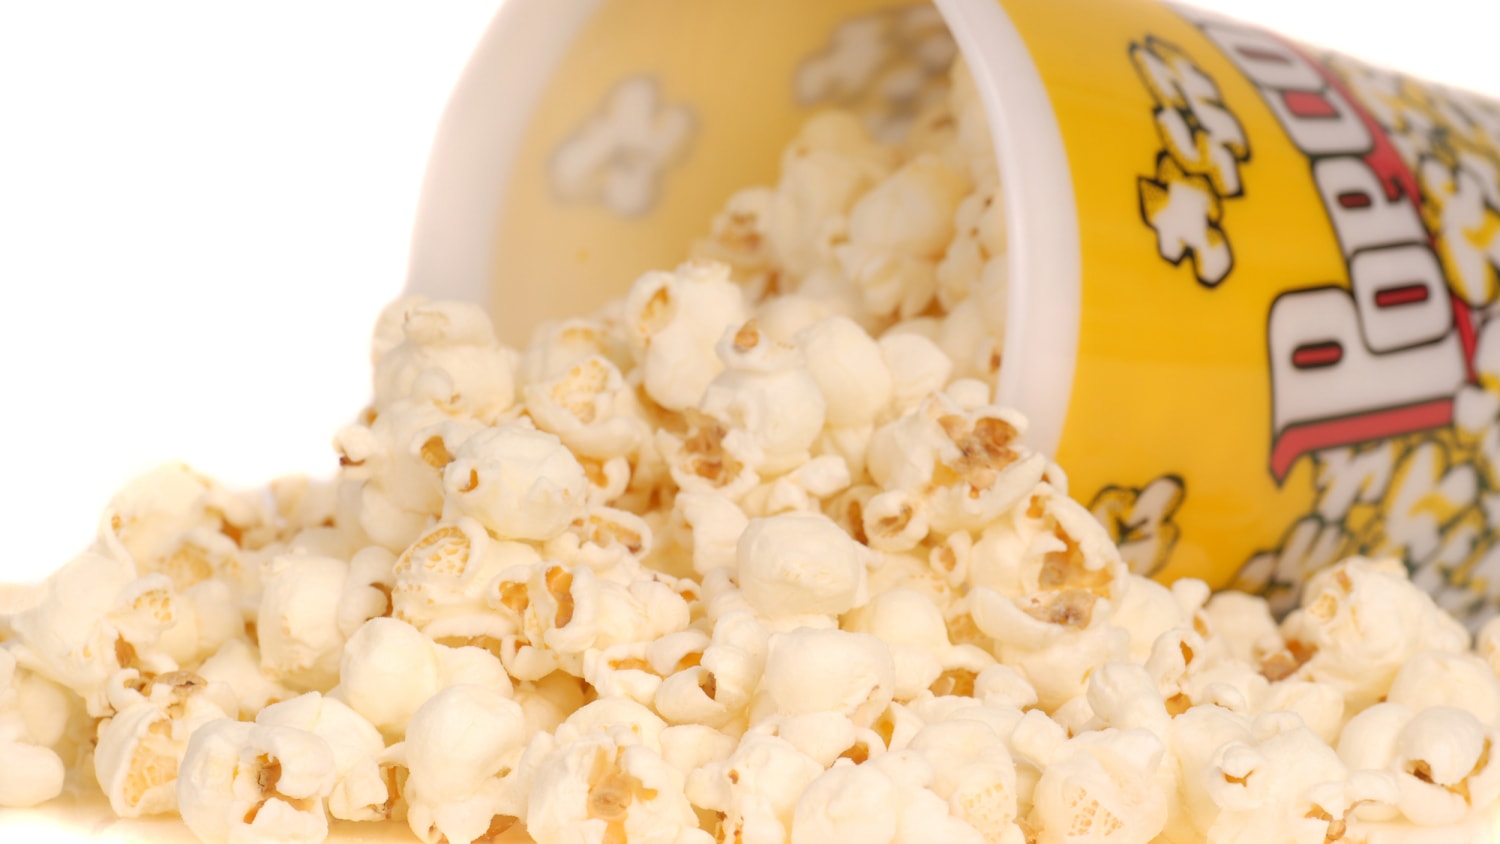 Stovetop popcorn - Eat Well Spend Smart